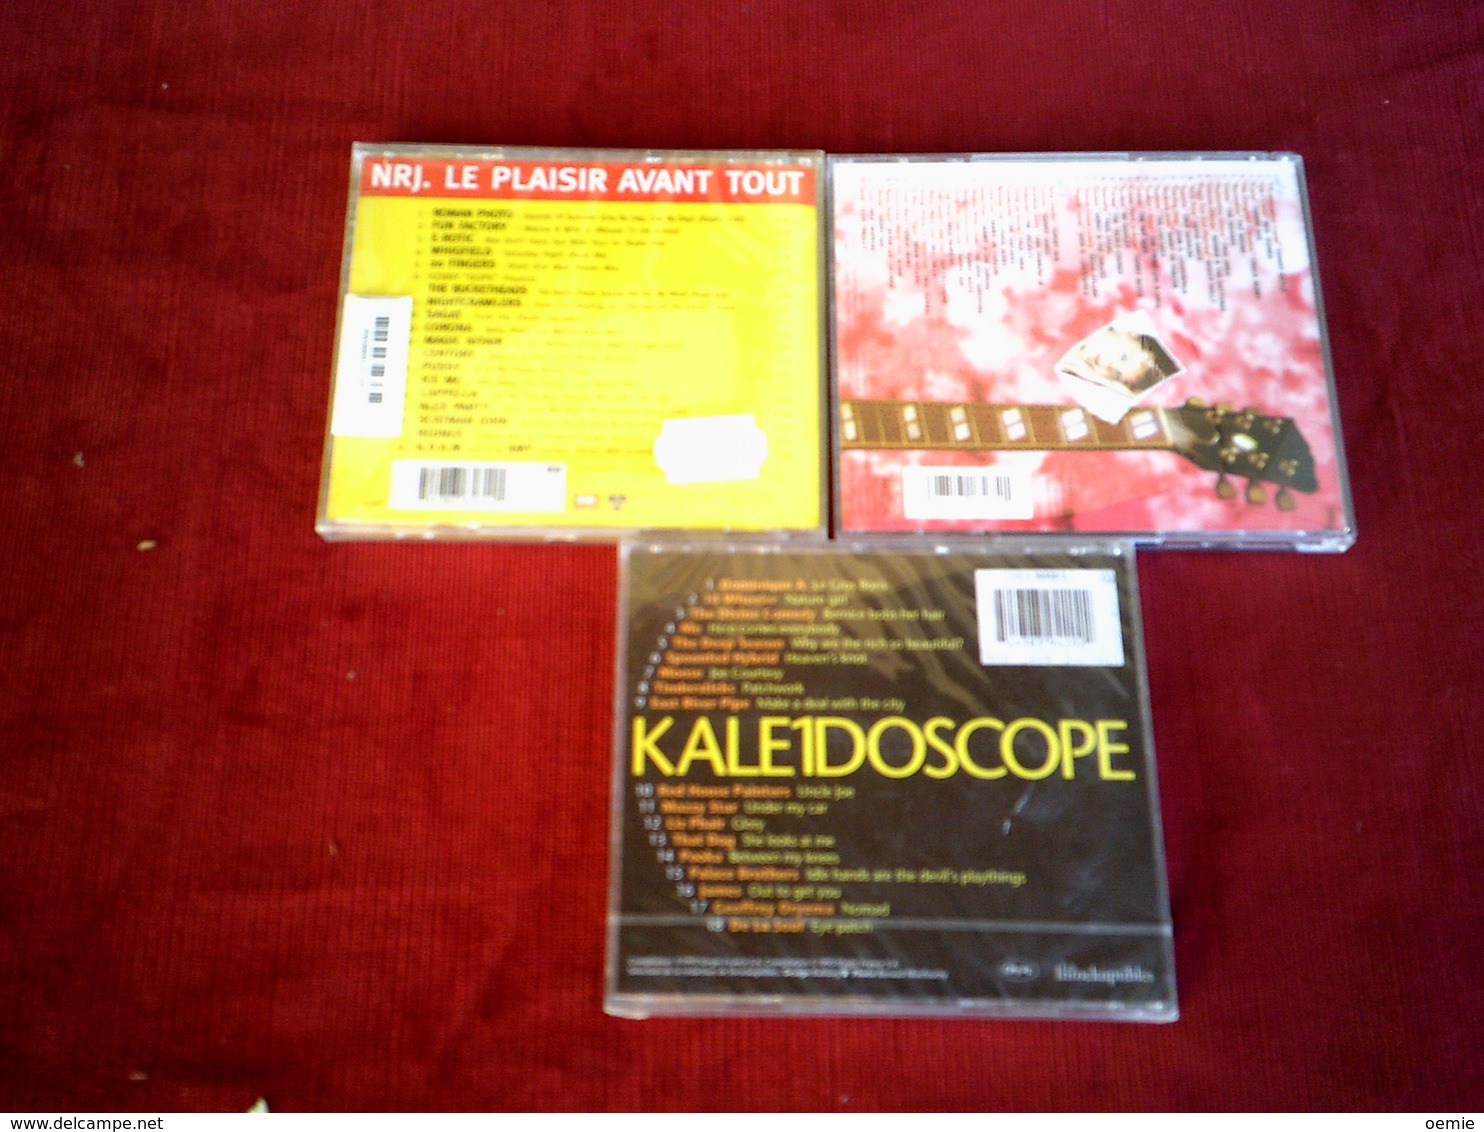 COLLECTION DE 3 CD ALBUMS  DE COMPILATION ° SONG THE LOLITAS  DOUBLE ALBUM + KALE1DOSCOPE + NRJ  BEST 1995 - Vollständige Sammlungen